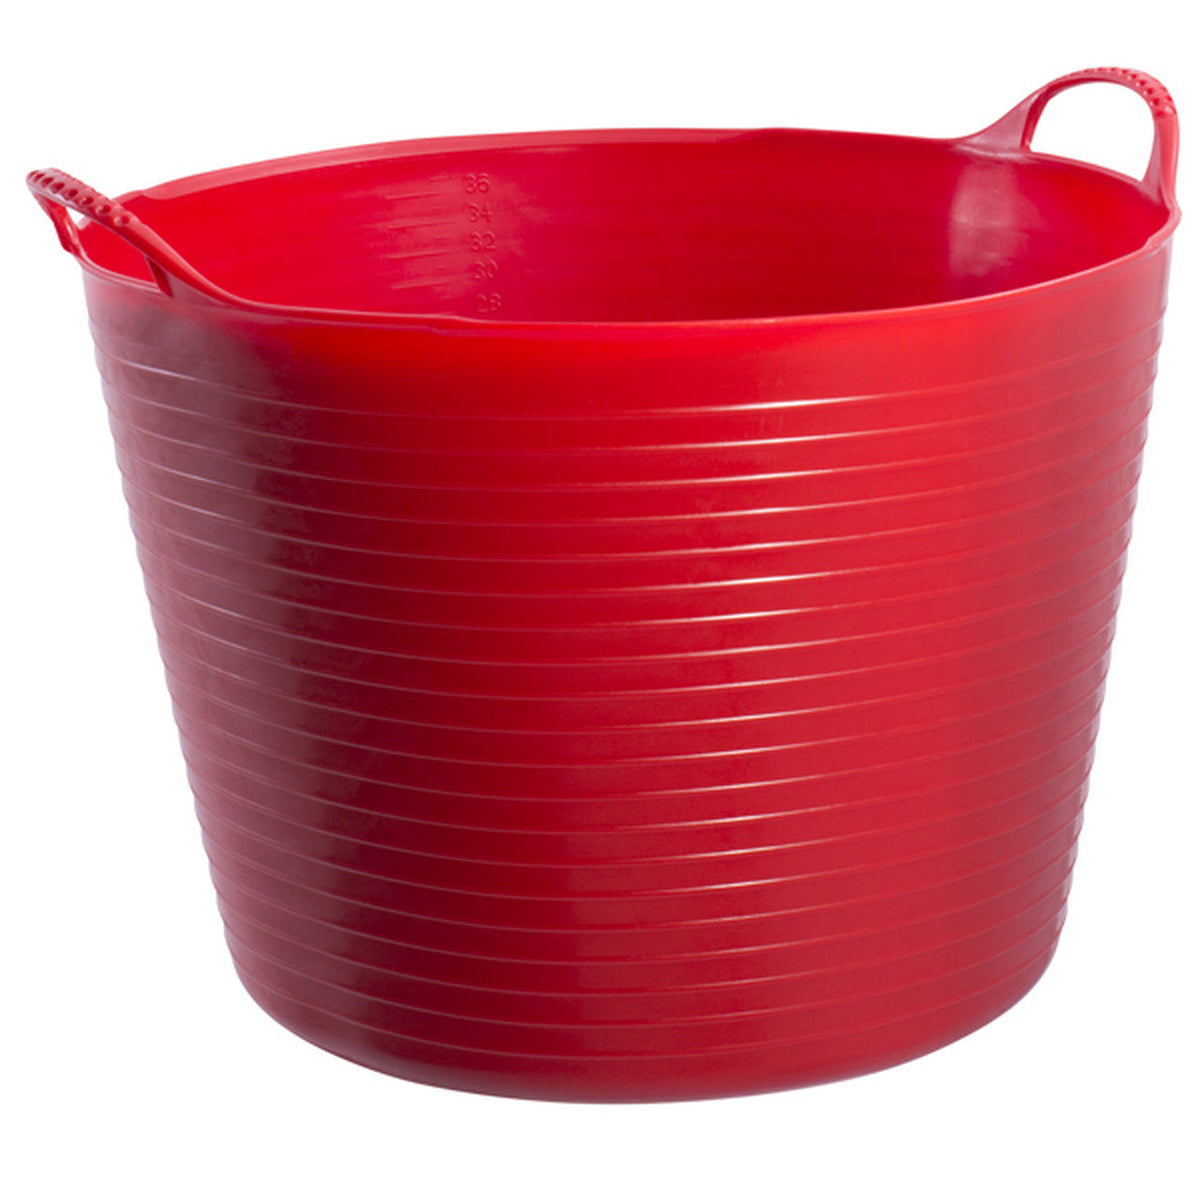 Bright red bucket